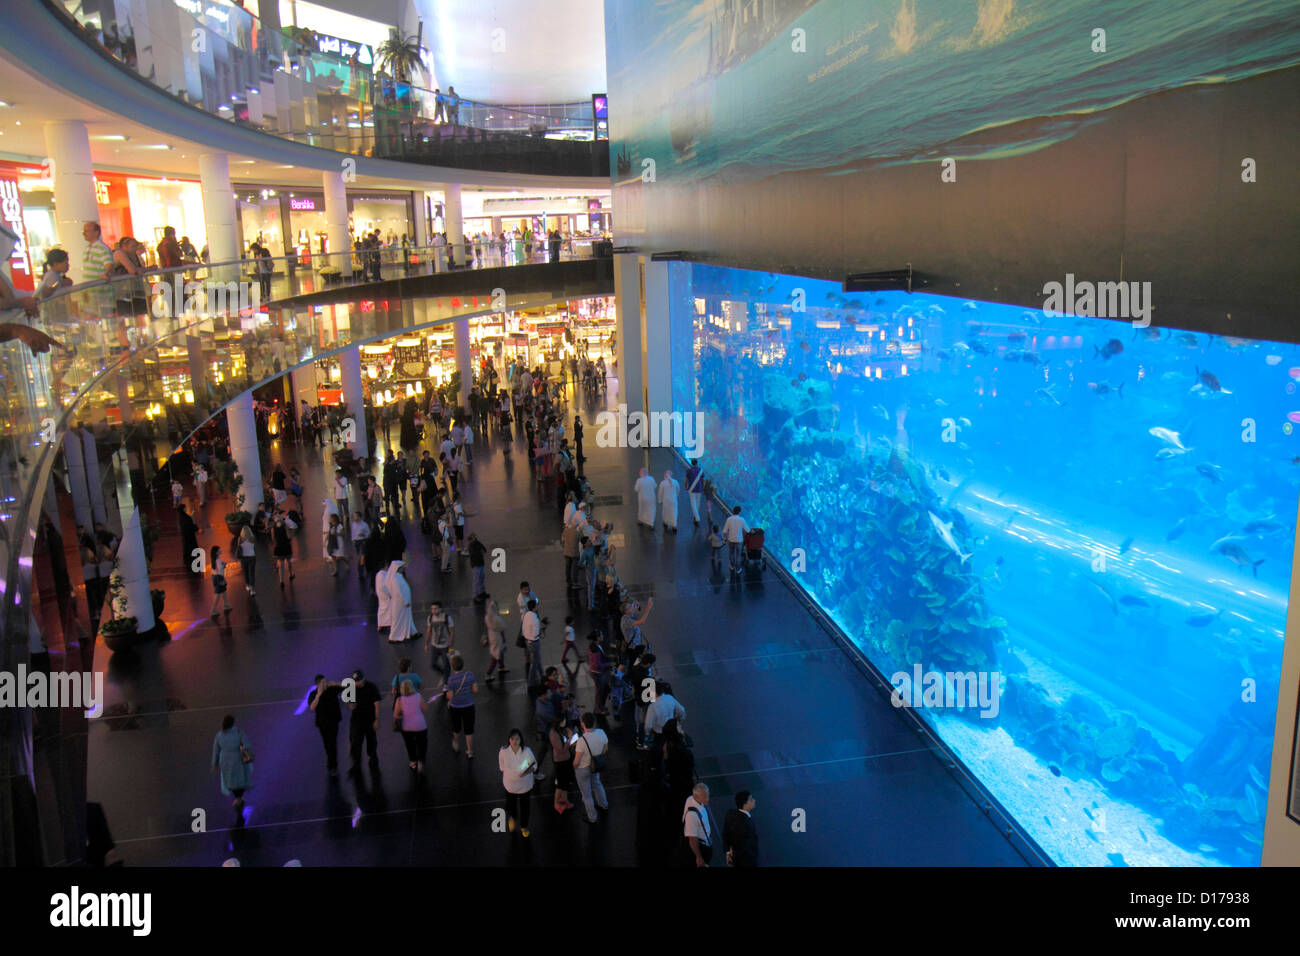 Dubai UAE,United Arab Emirates,Downtown Dubai,Burj Dubai,Dubai mall,Dubai Aquarium,Underwater Zoo,tank,fish,levels,UAE121011125 Stock Photo